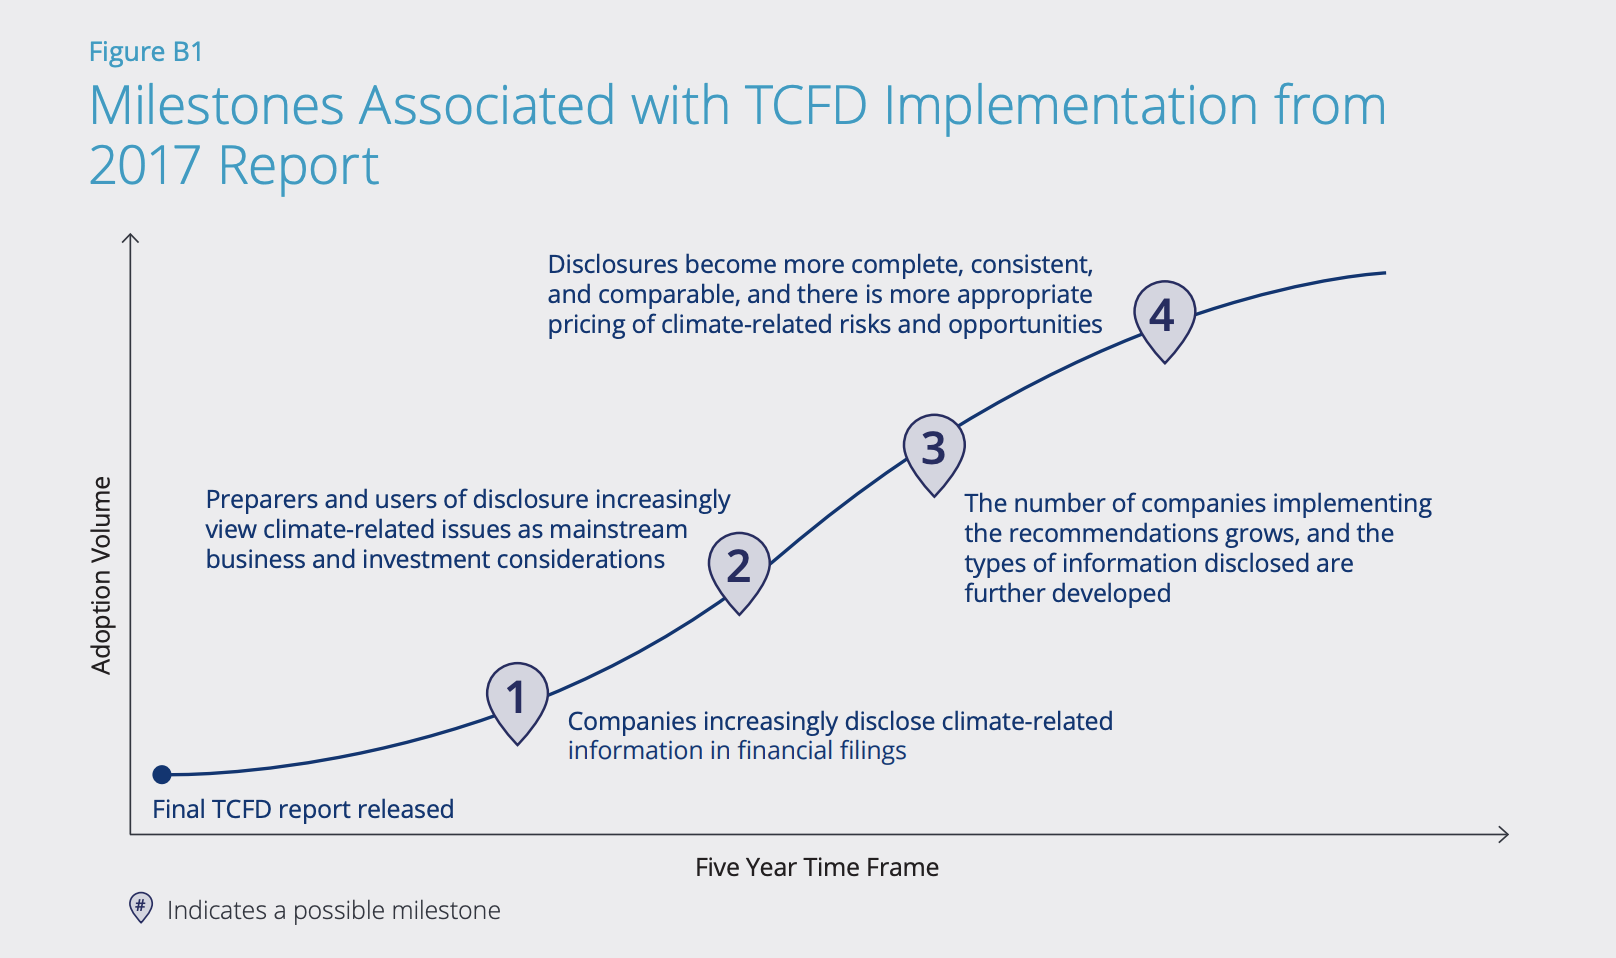 TCFD milestones